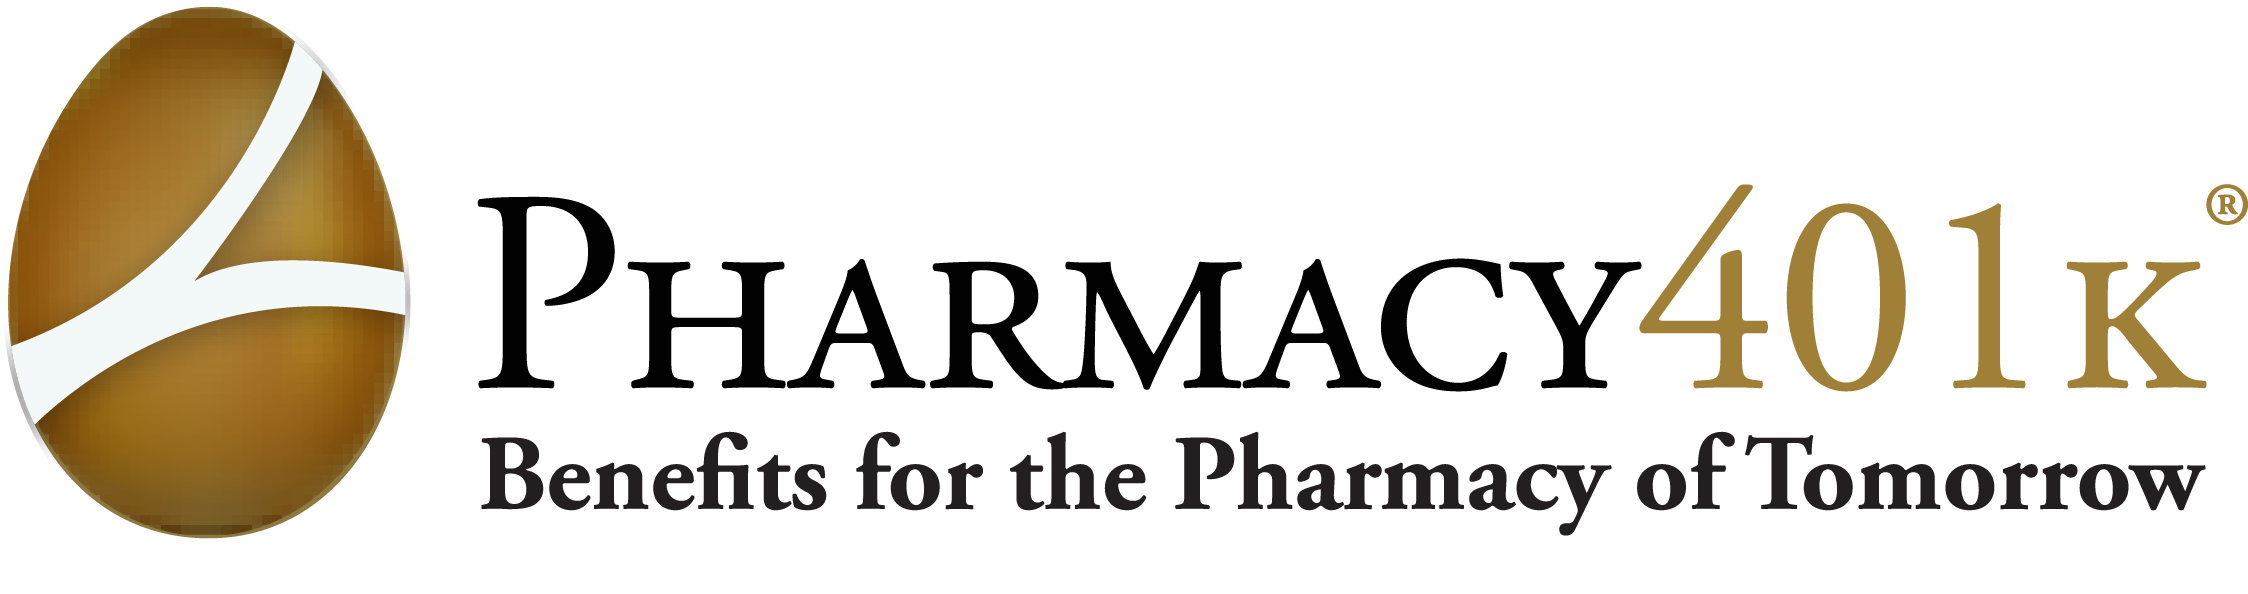 Pharmacy401k_benefits_REVISED_2023-1